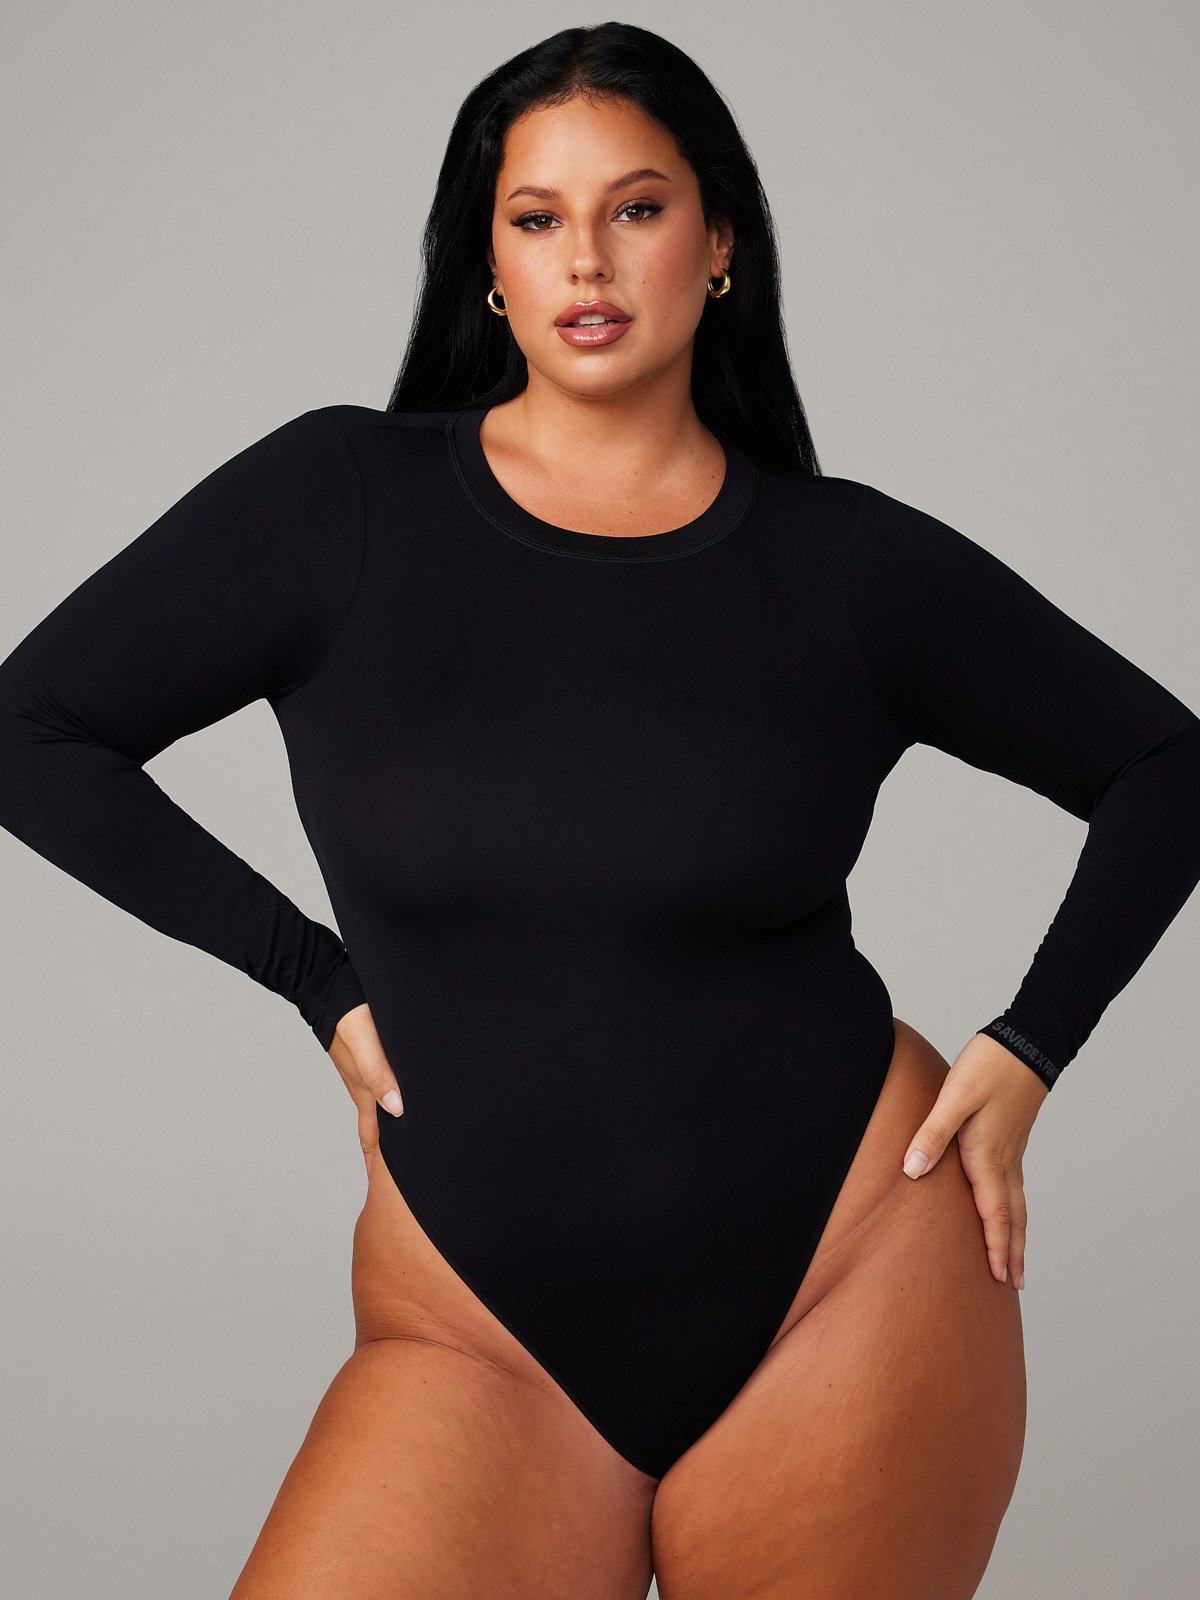 Women's Plus Size Long Sleeve Lace Black Bodysuit